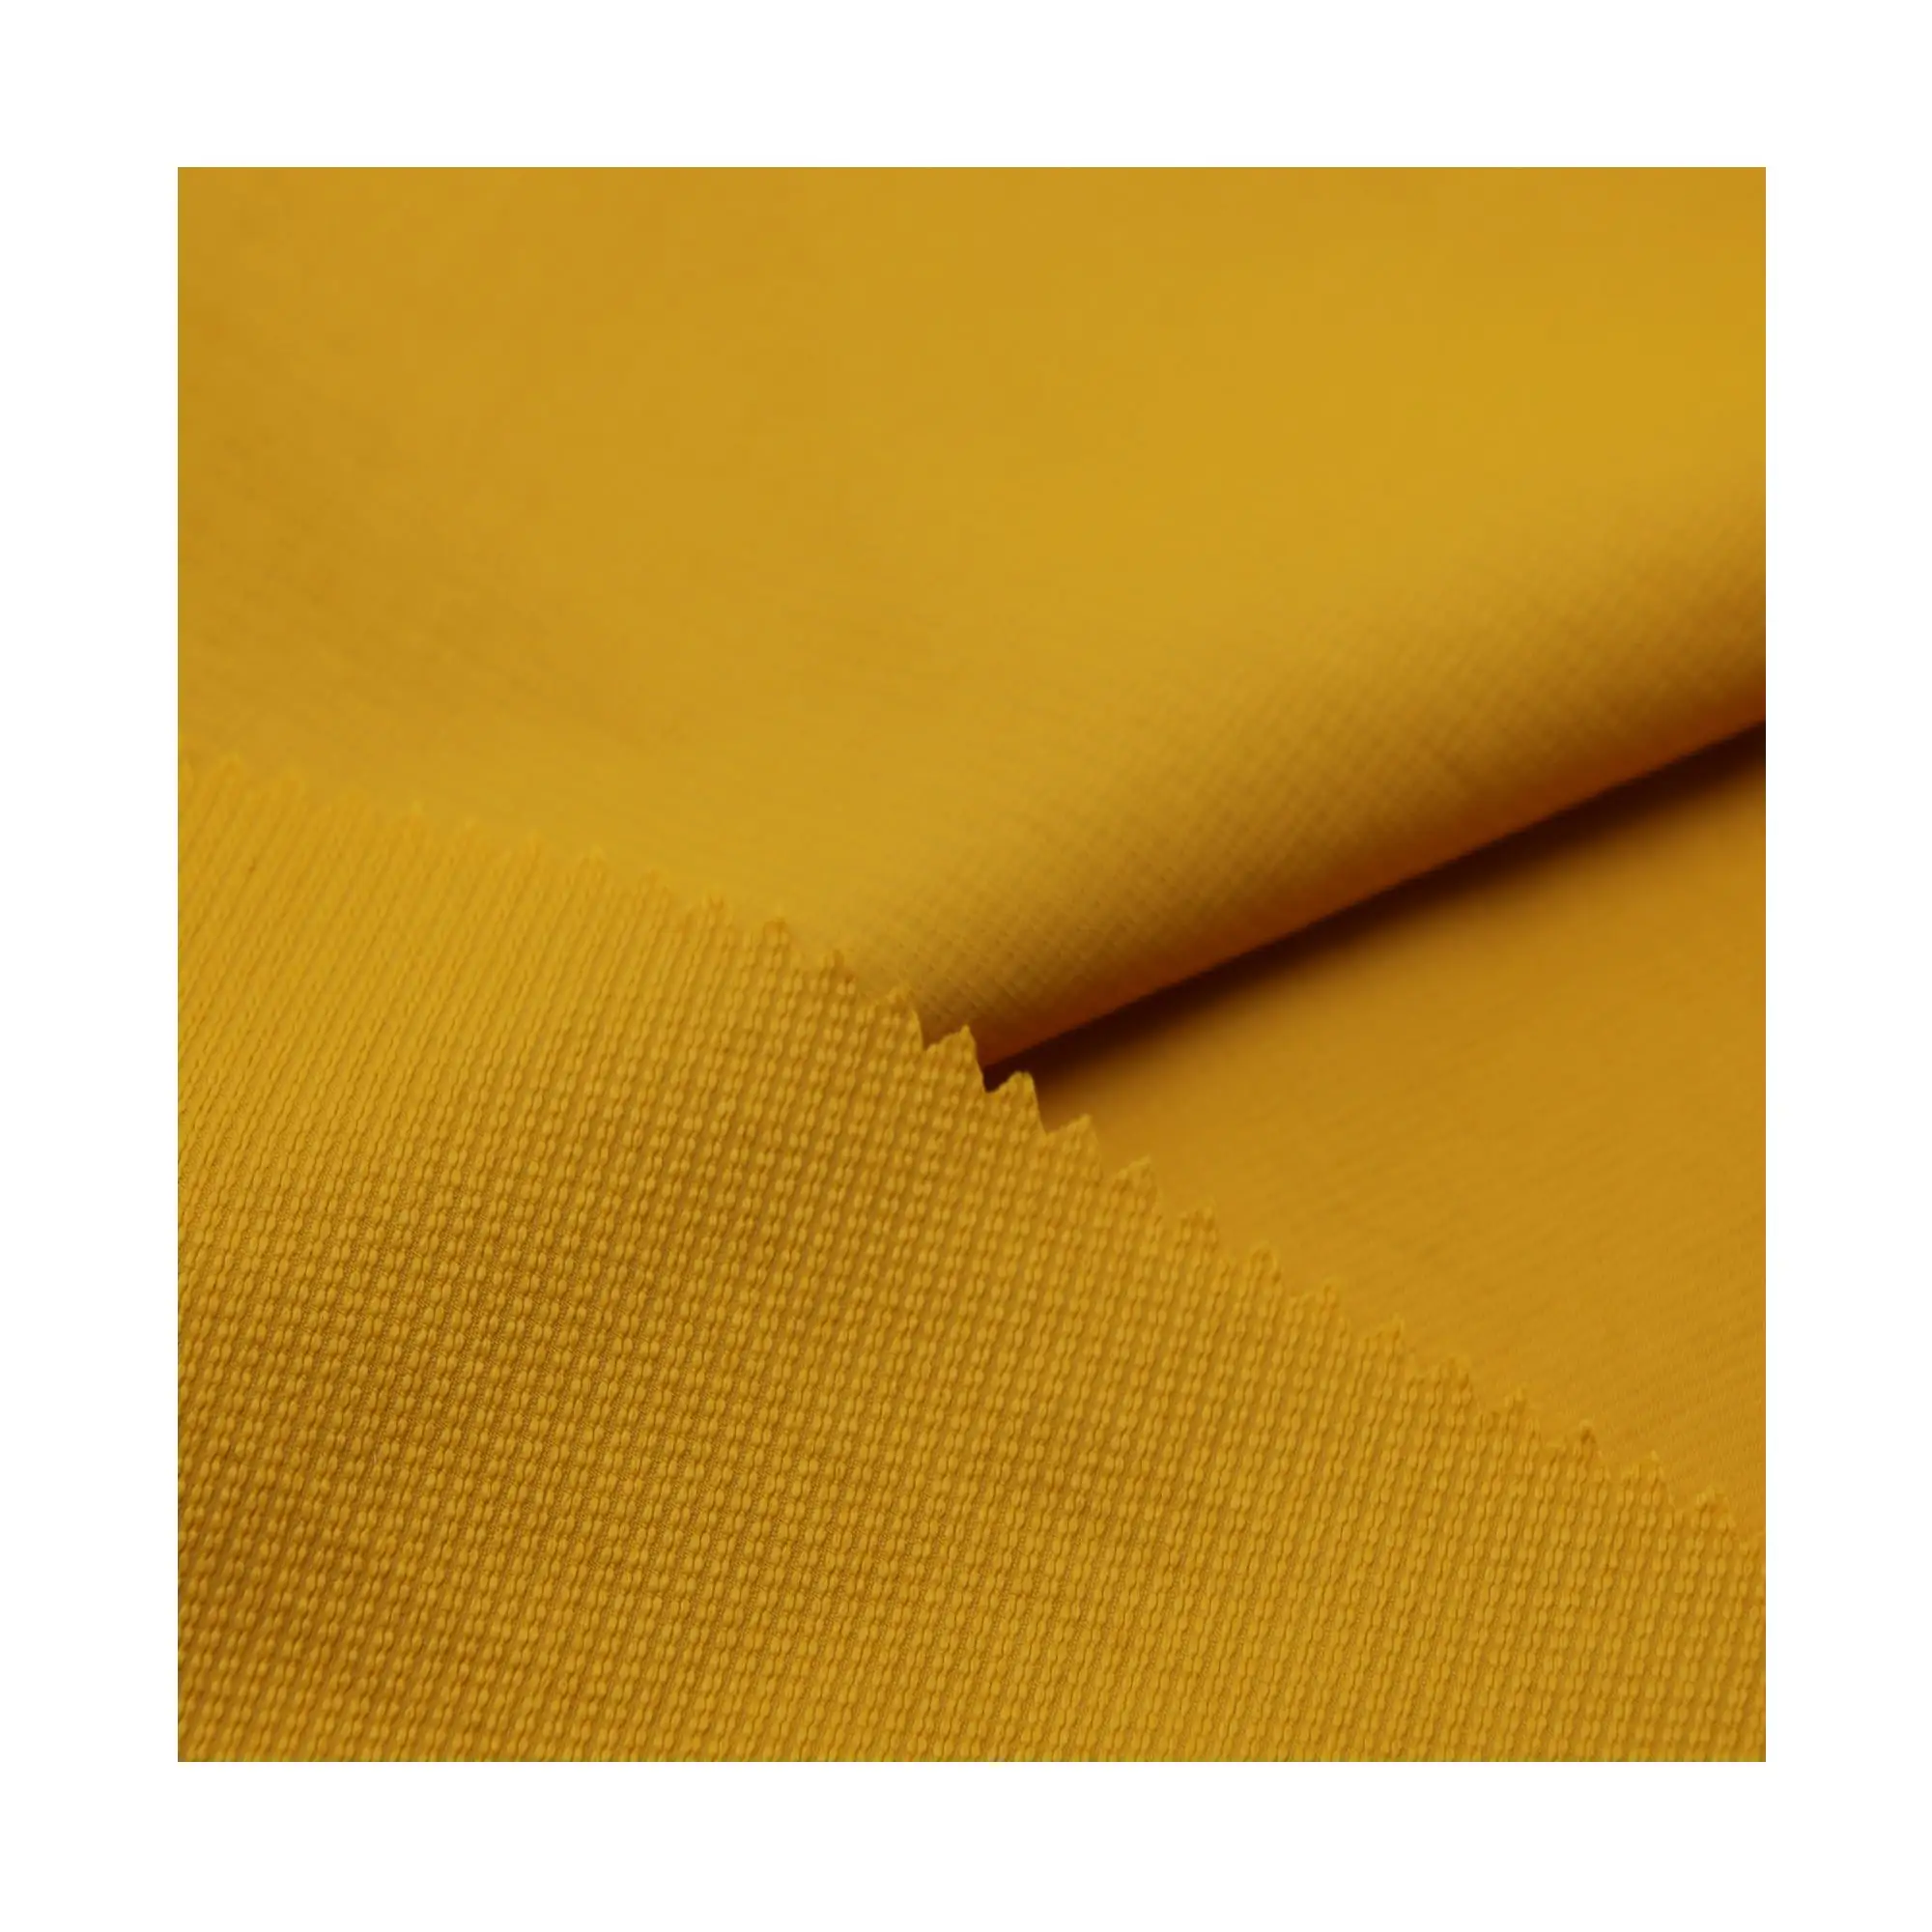 Waterproof Jacquard Nylon Spandex 4 Way Stretch Fabric For Pants Jacket Winter wear